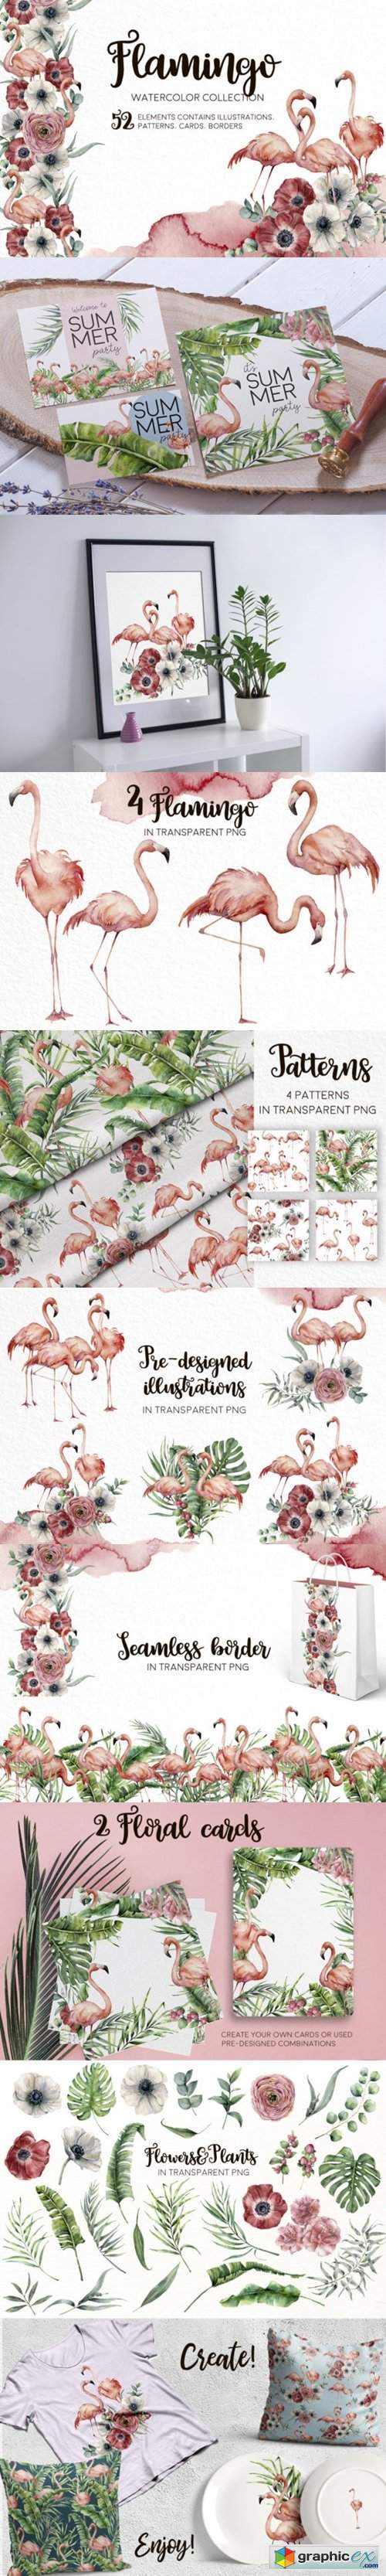 Flamingo. Watercolor collection